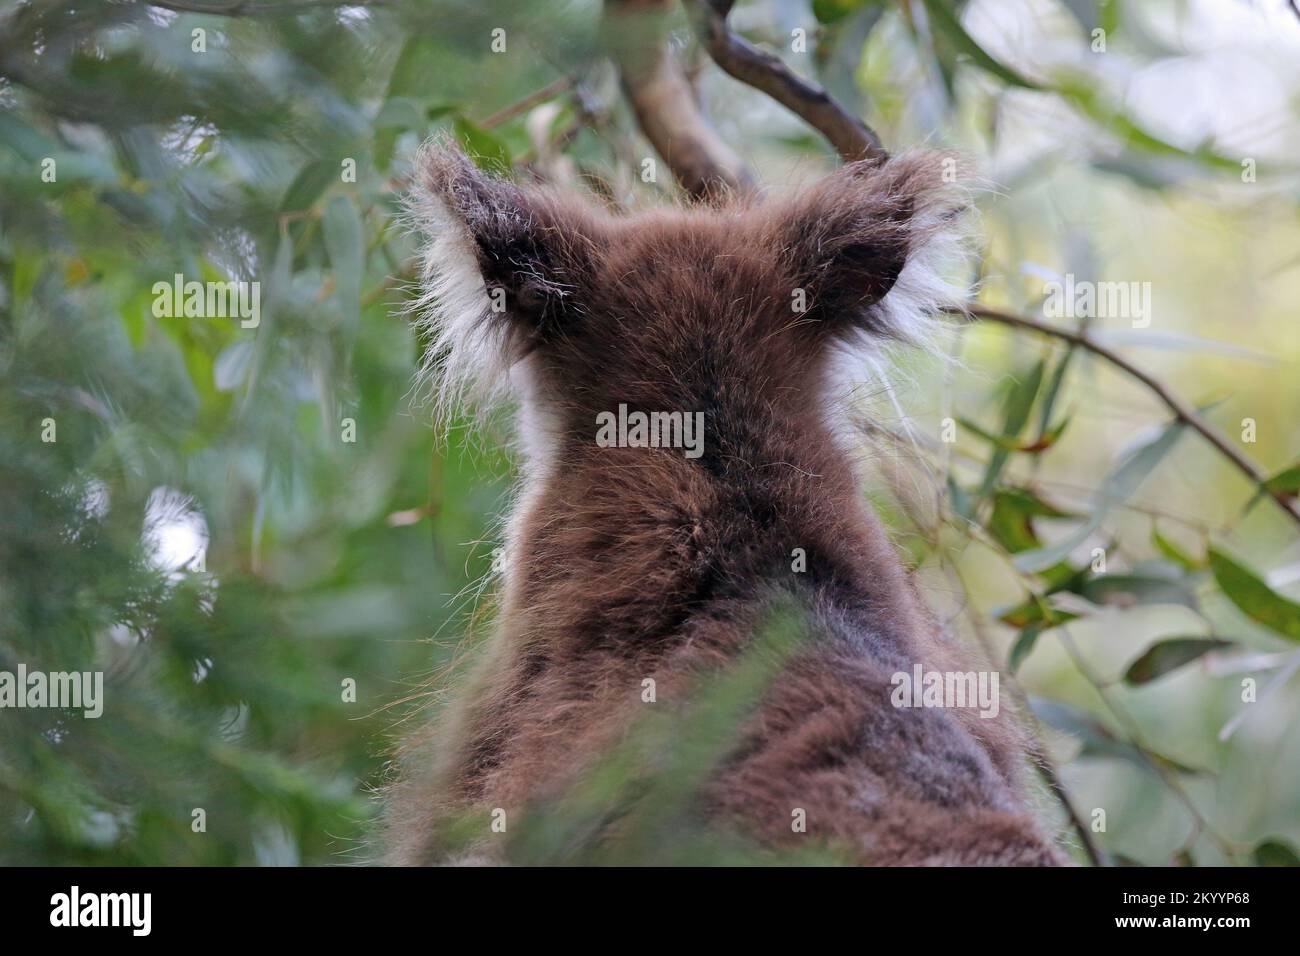 Koala back view - Australia Stock Photo